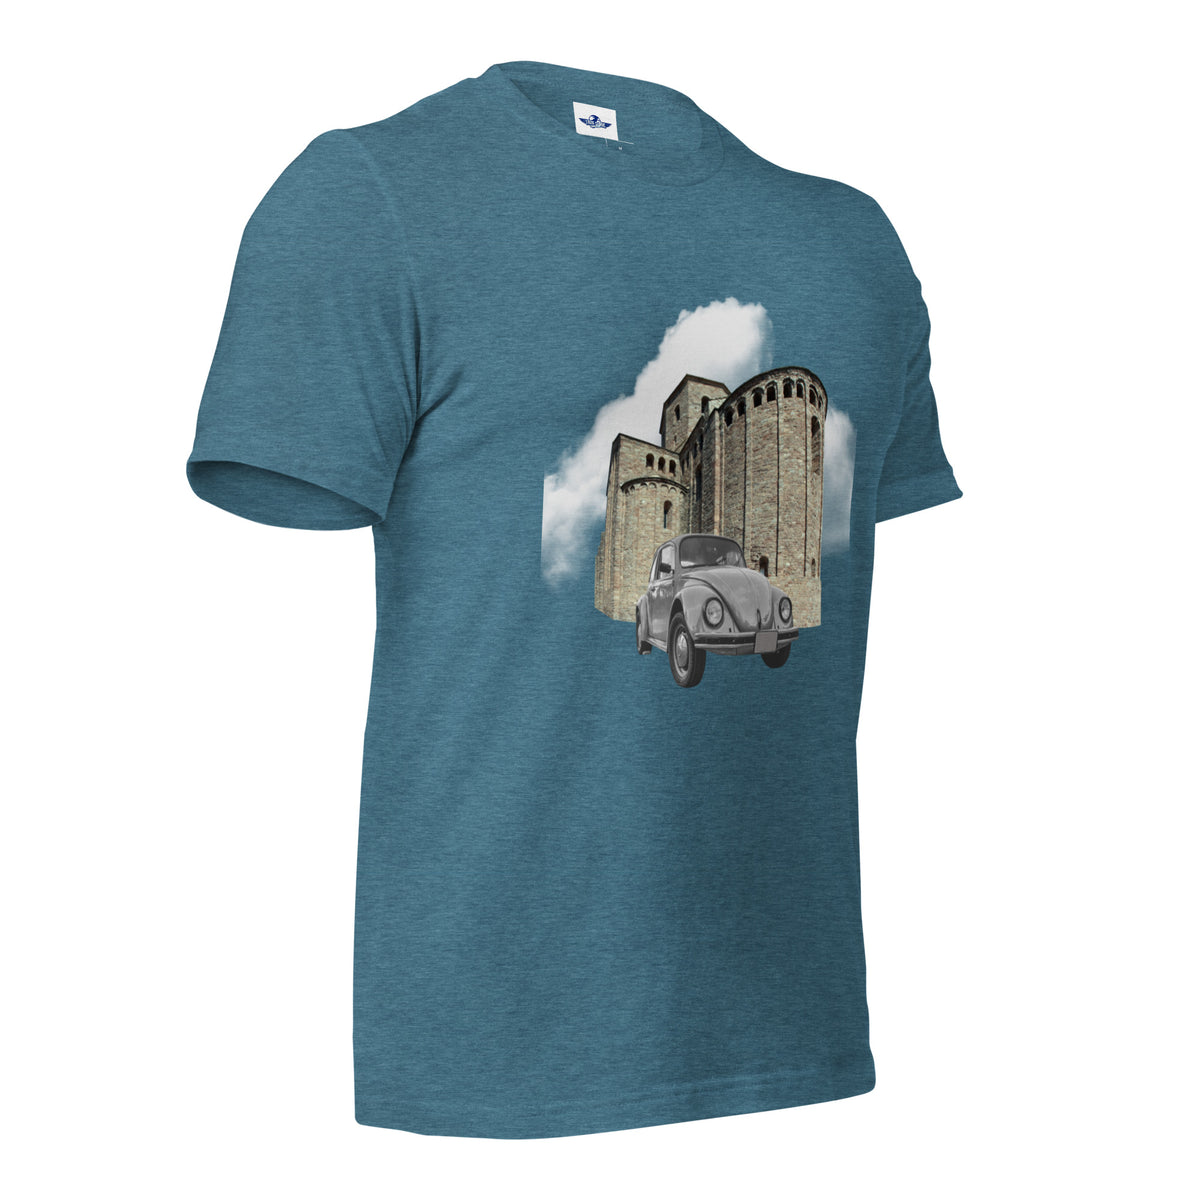 Cloudy Times T-Shirt